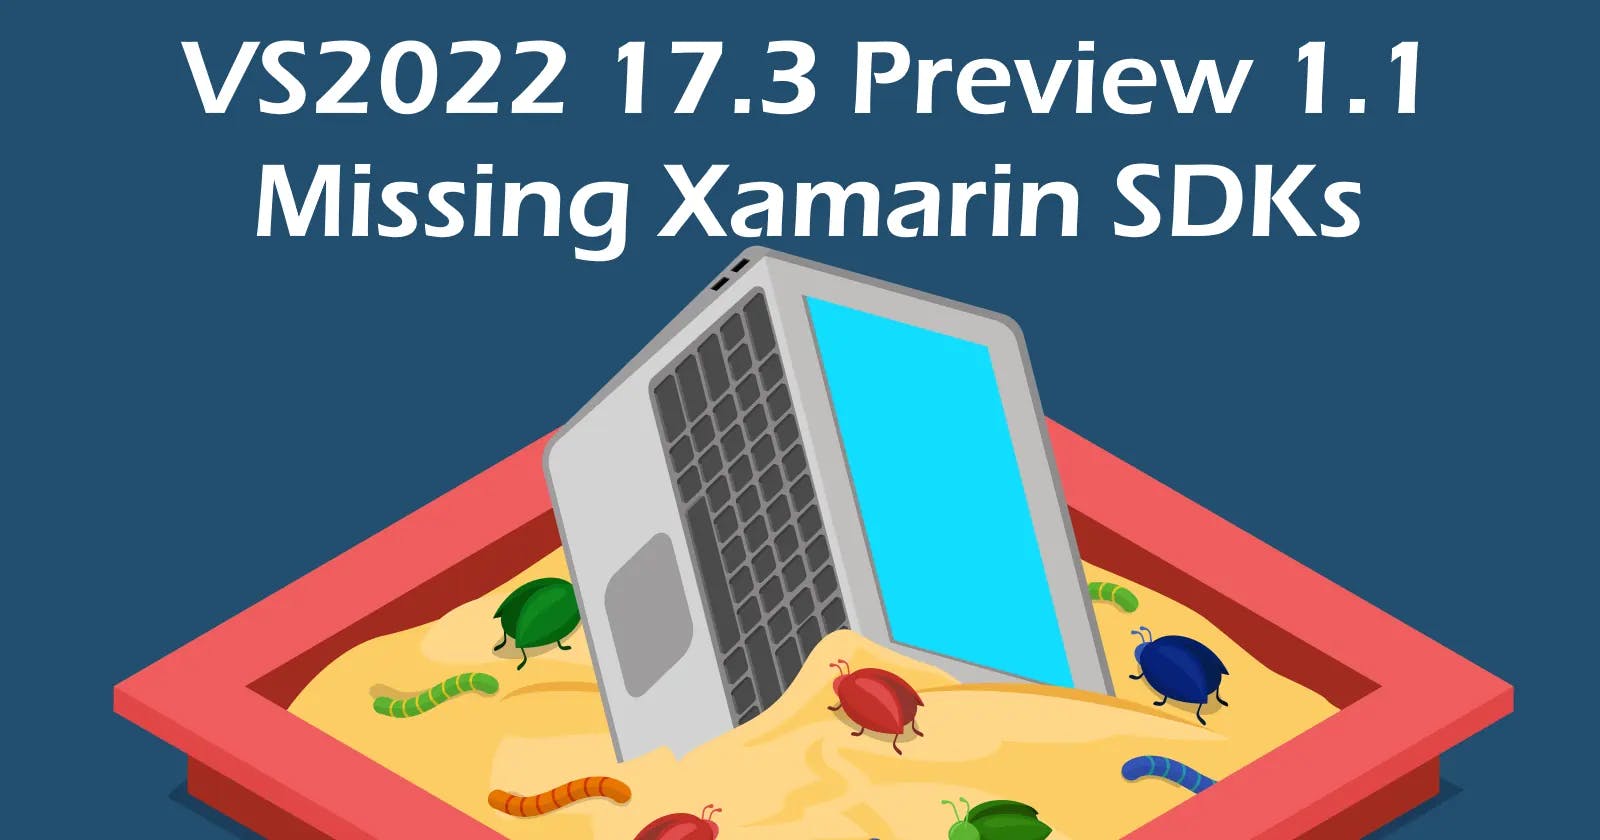 VS2022 17.3 Preview 1.1 - Missing Xamarin SDKs